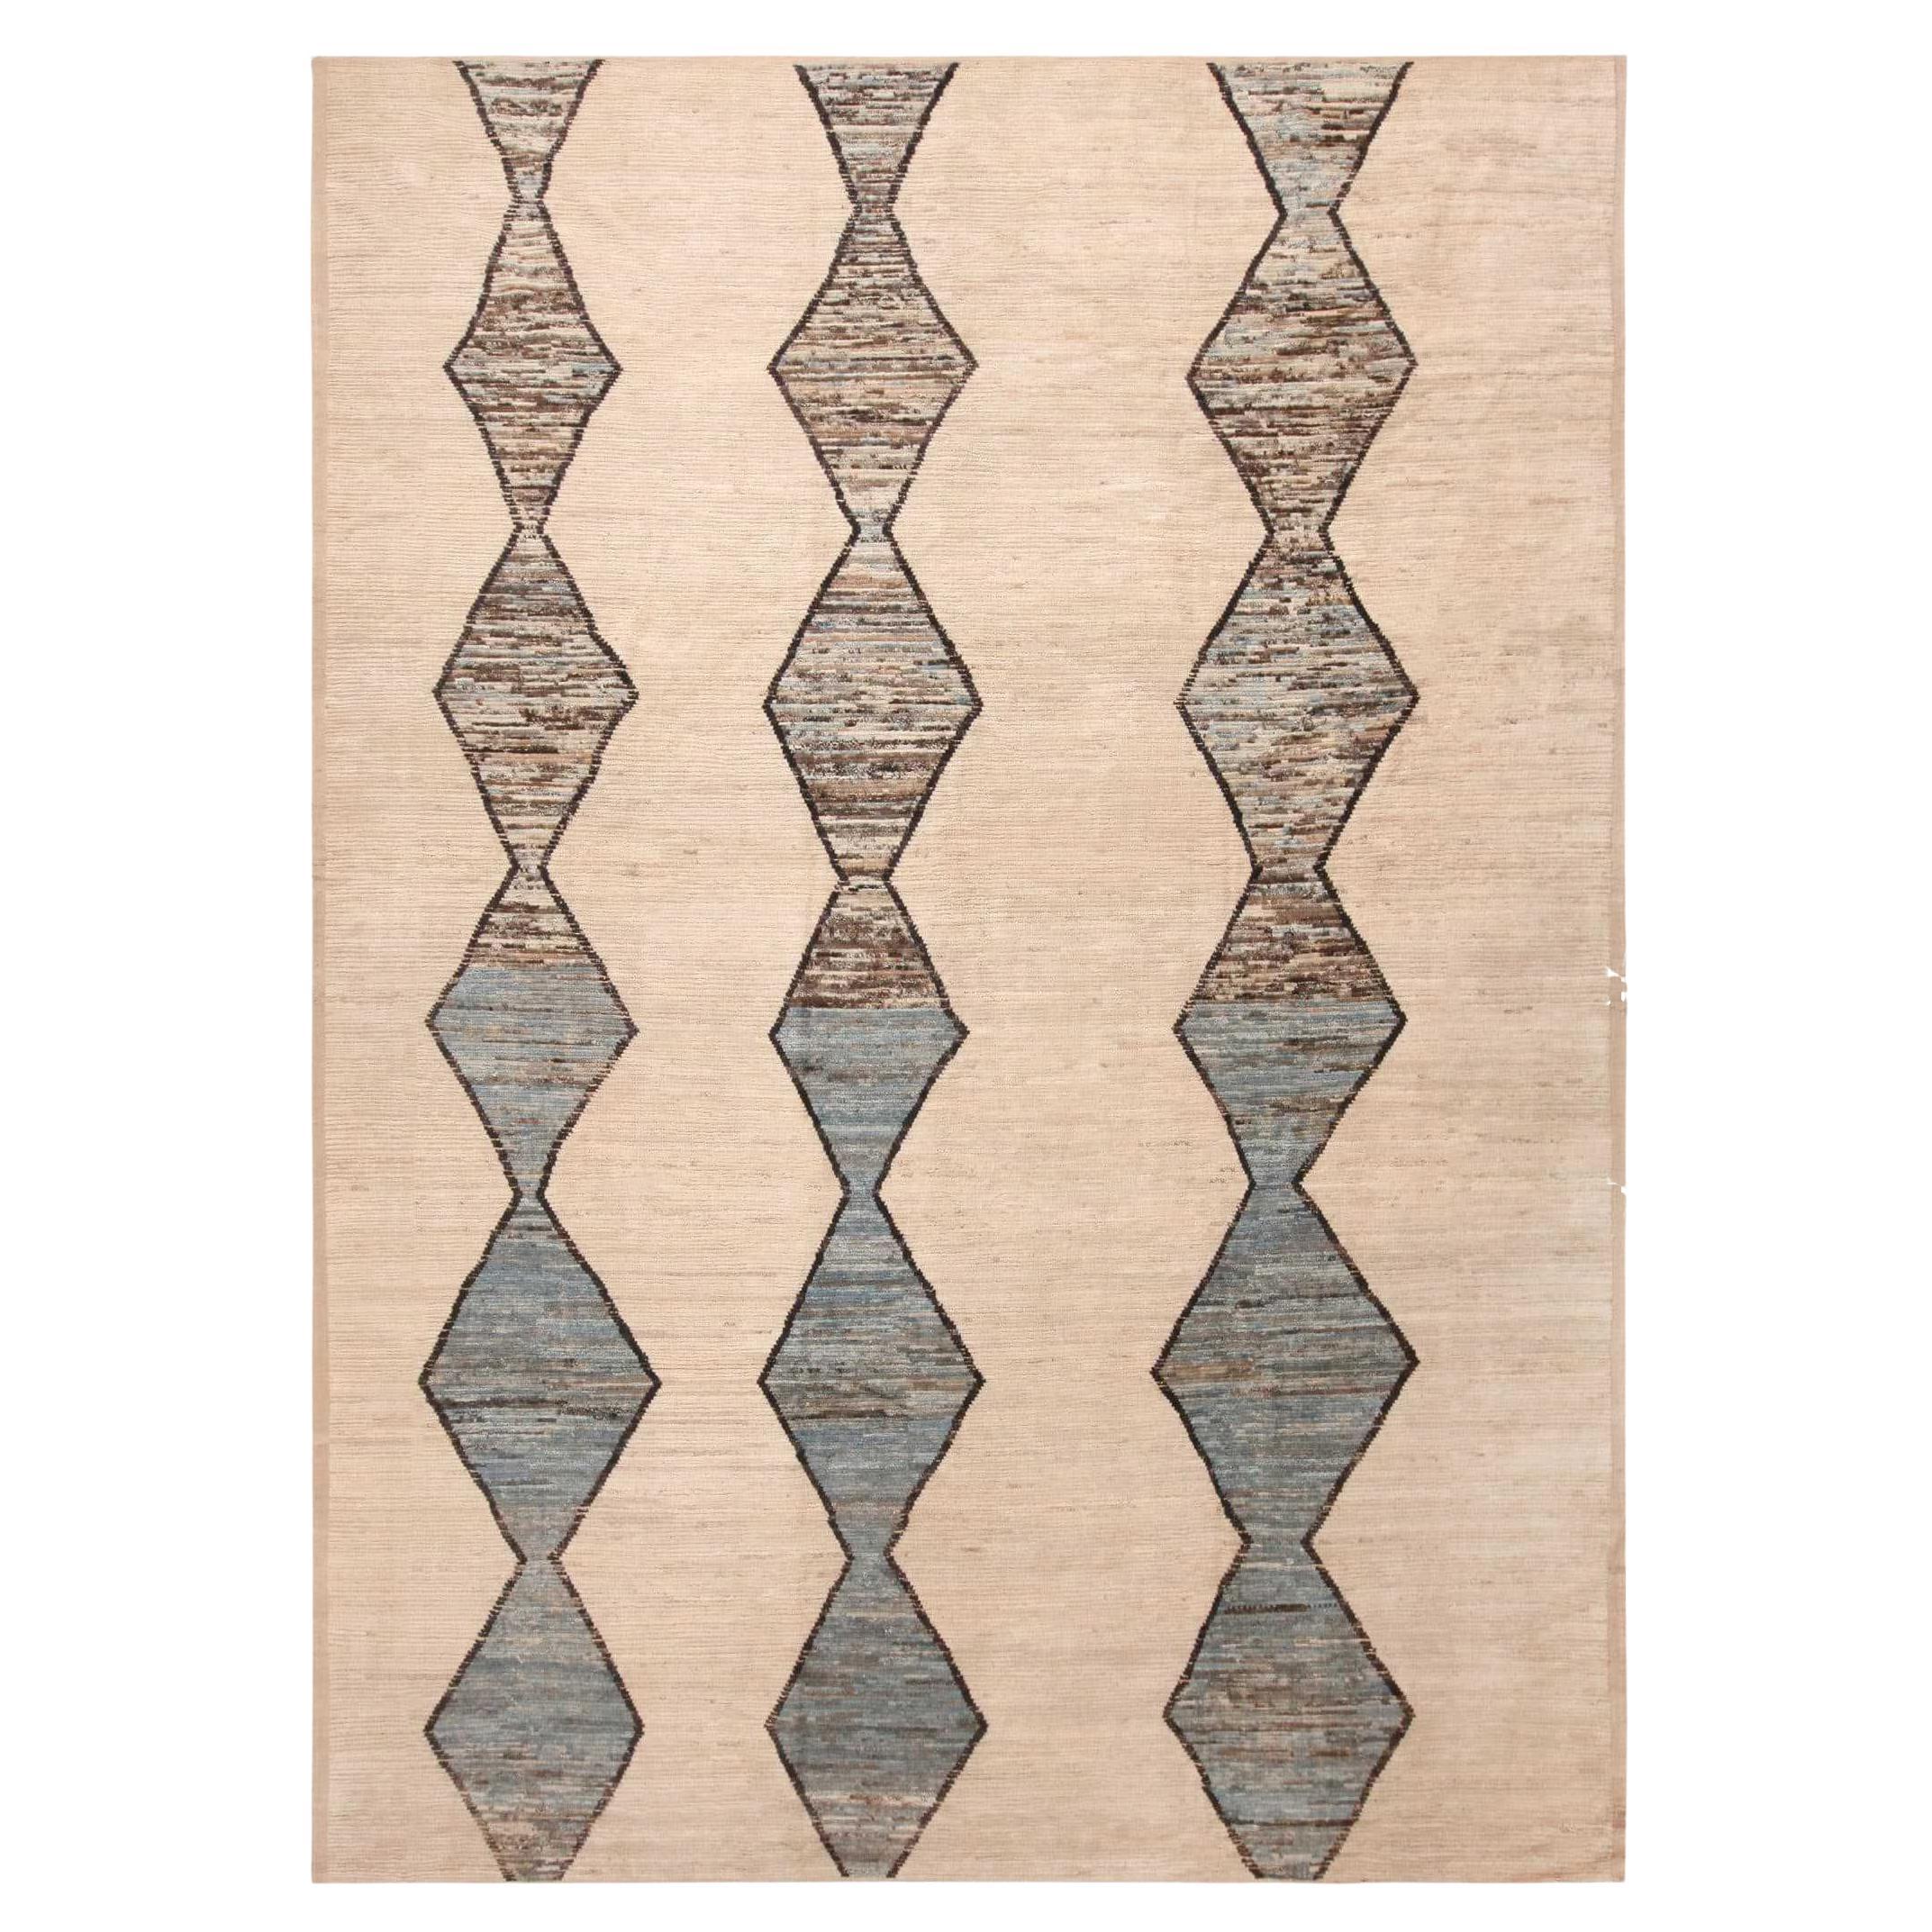 Nazmiyal Collection Geometric Tribal Design Decorative Area Rug 11'1" x 15'1" For Sale